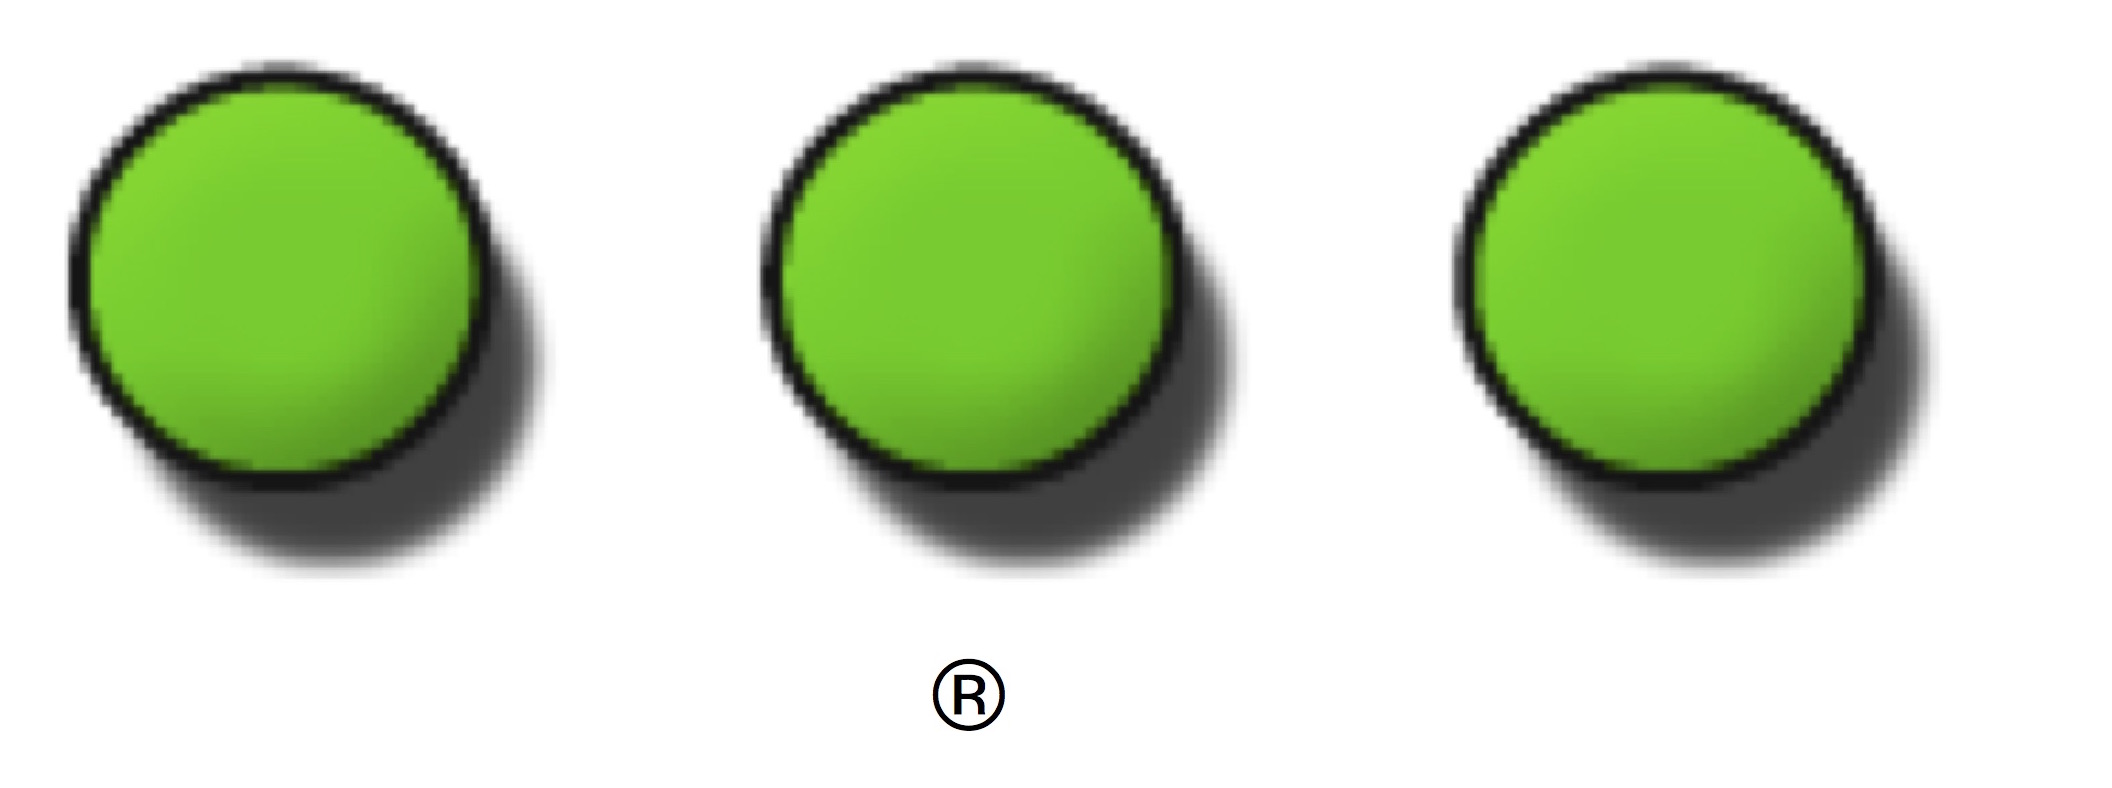 3 Green Dots (R)